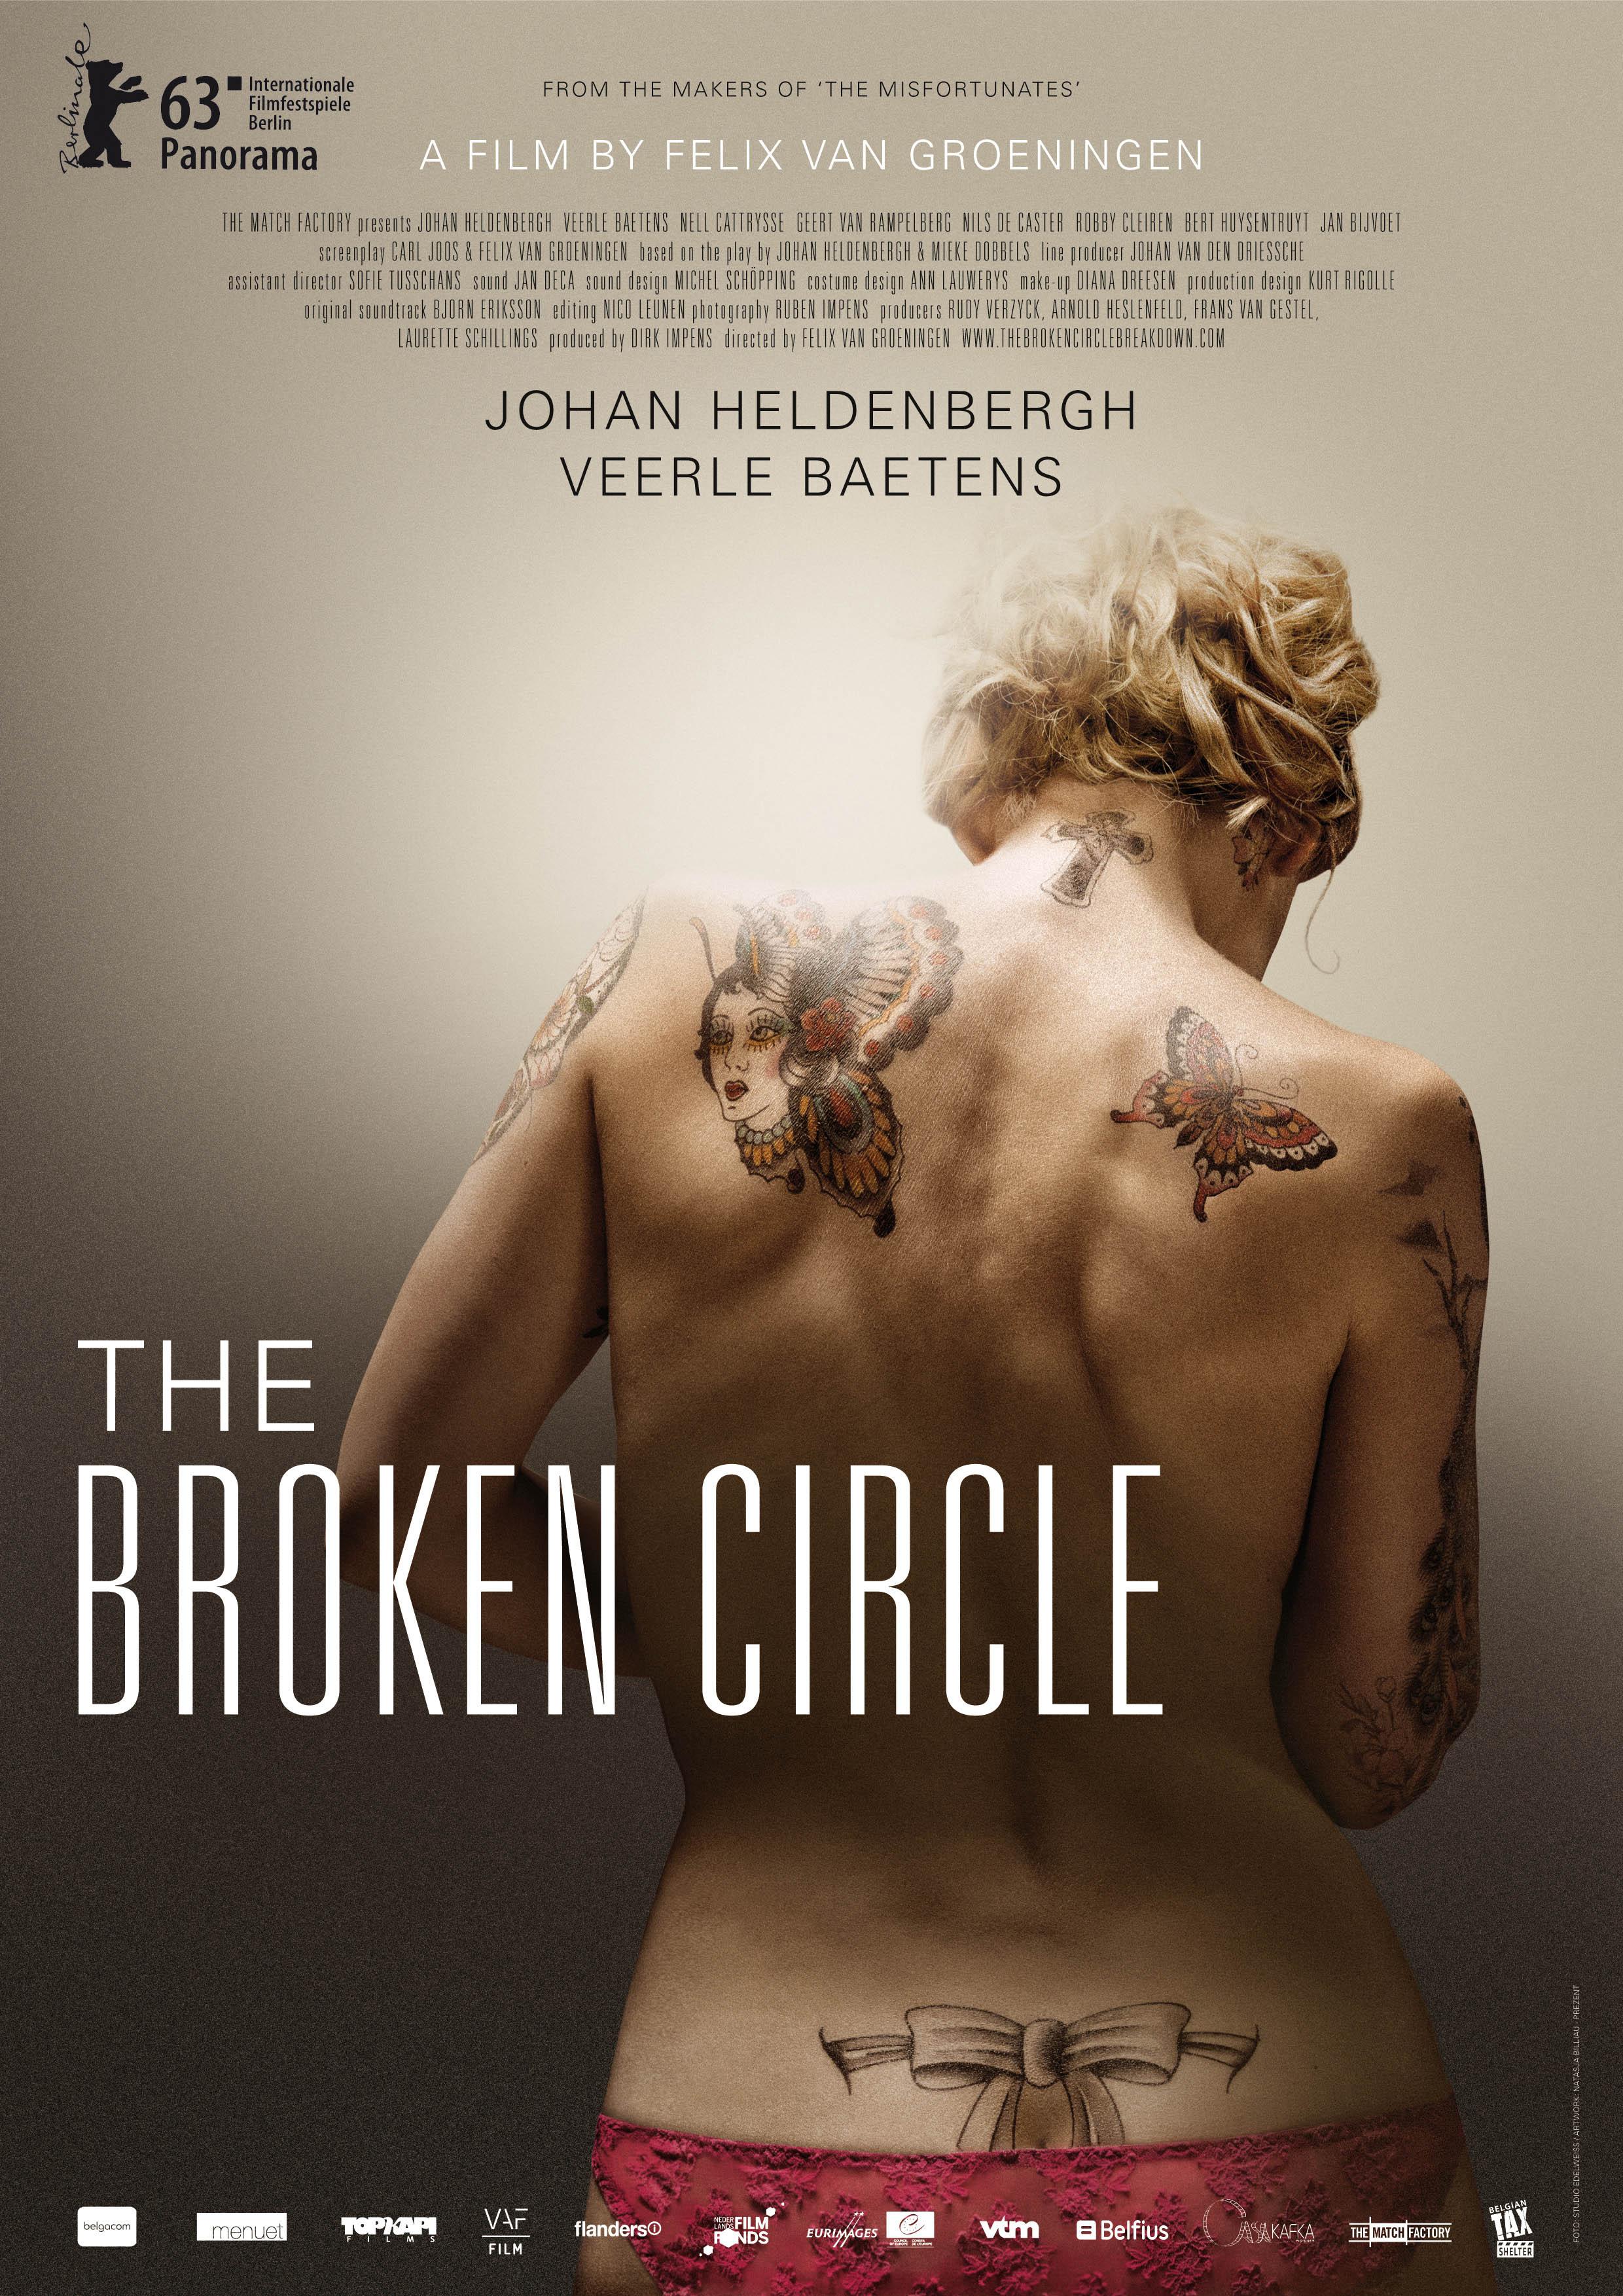 Постер фильма Разомкнутый круг | Broken Circle Breakdown